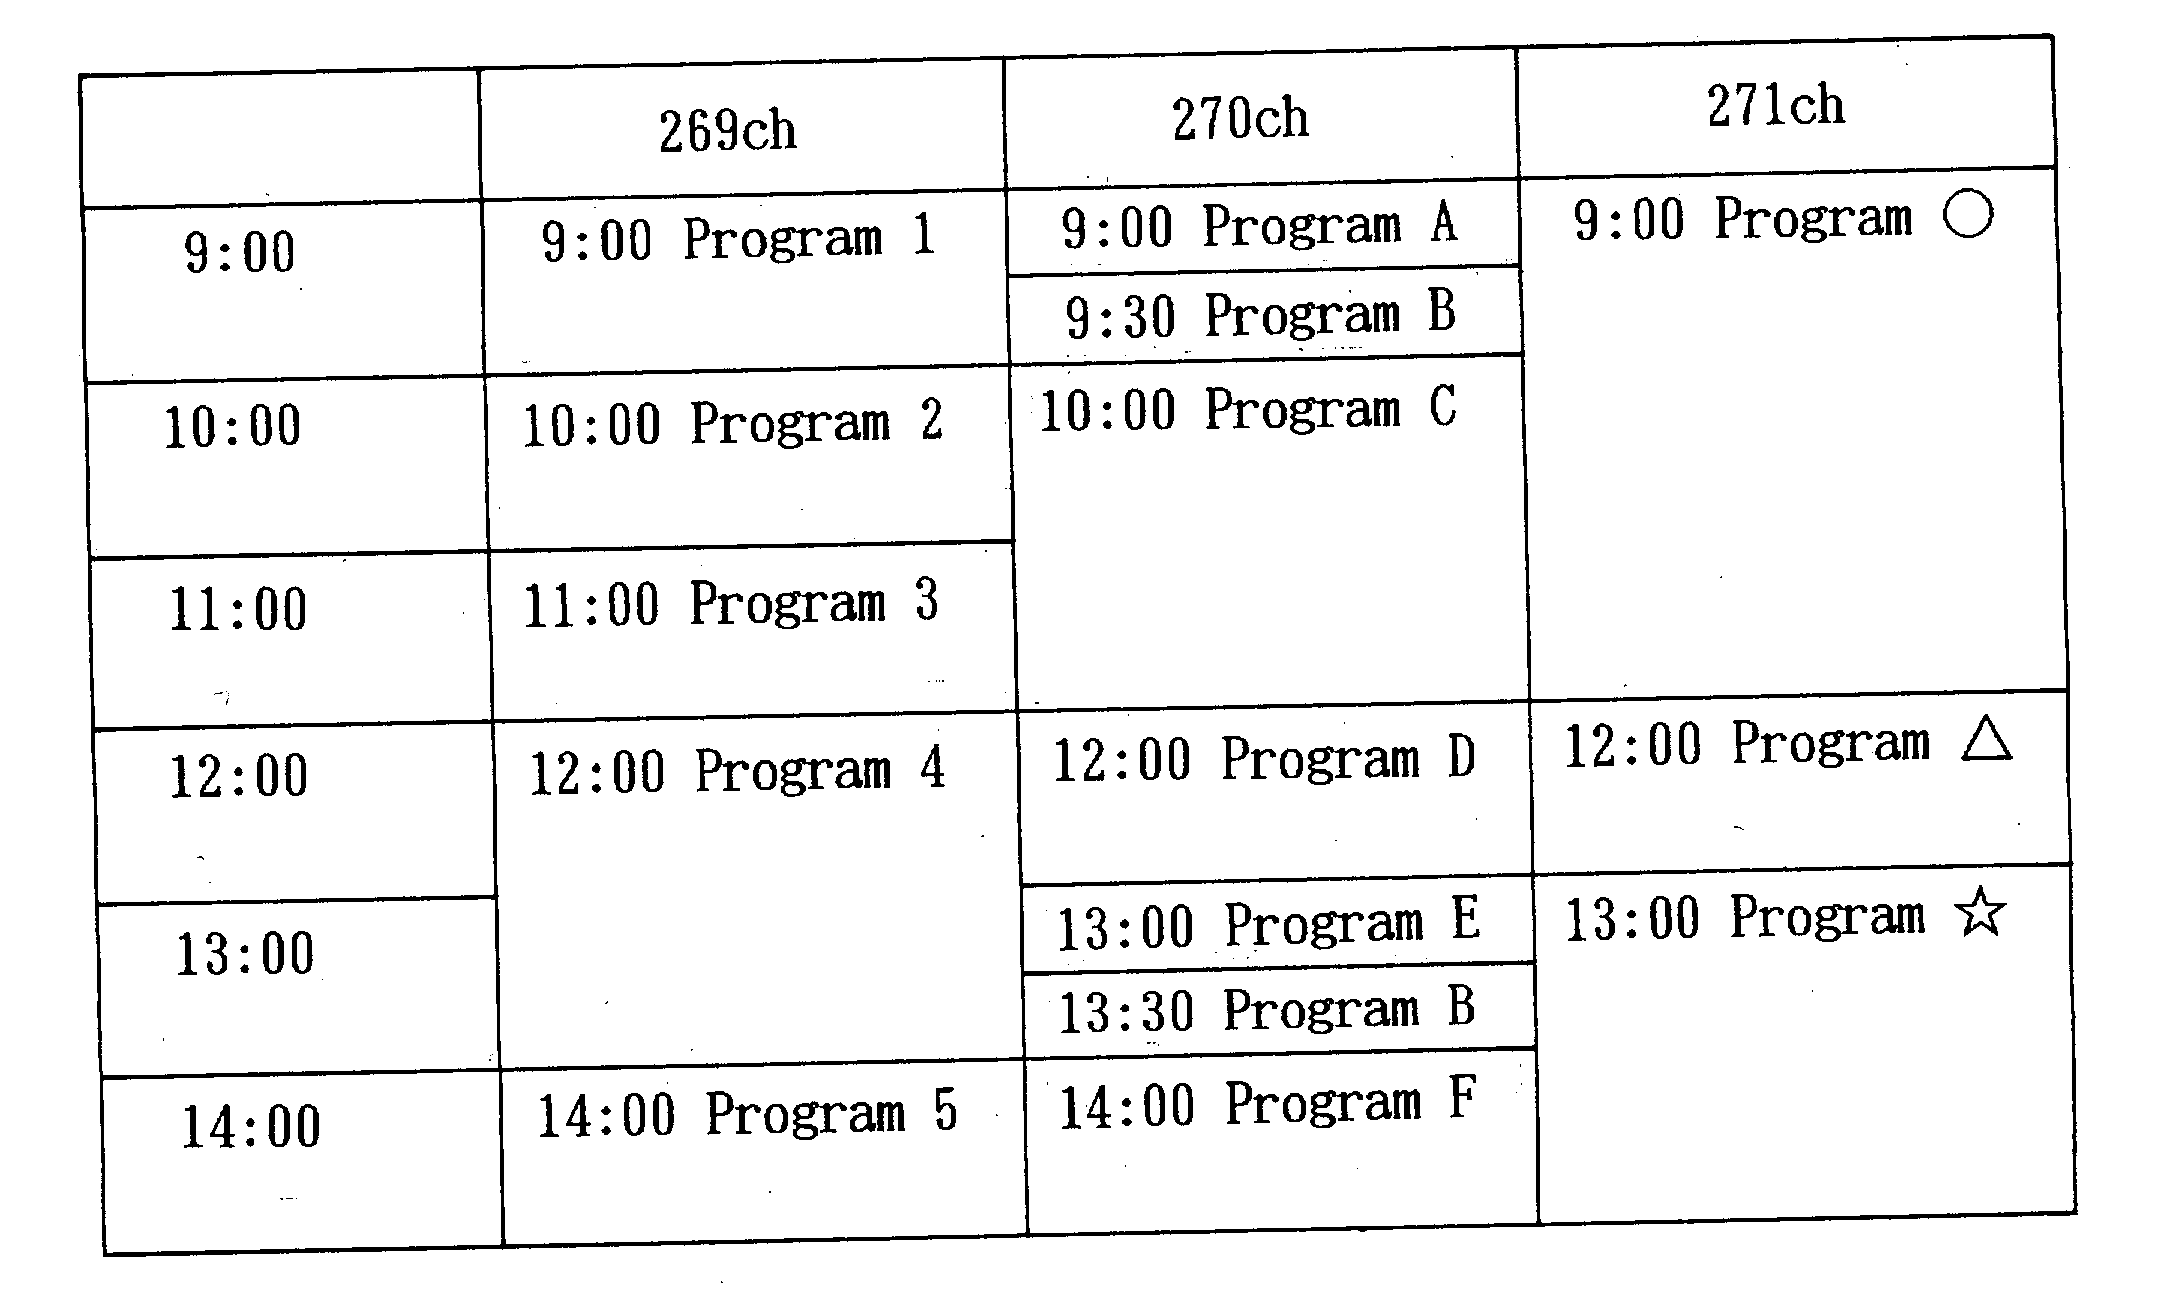 Broadcast program recording programming device and method